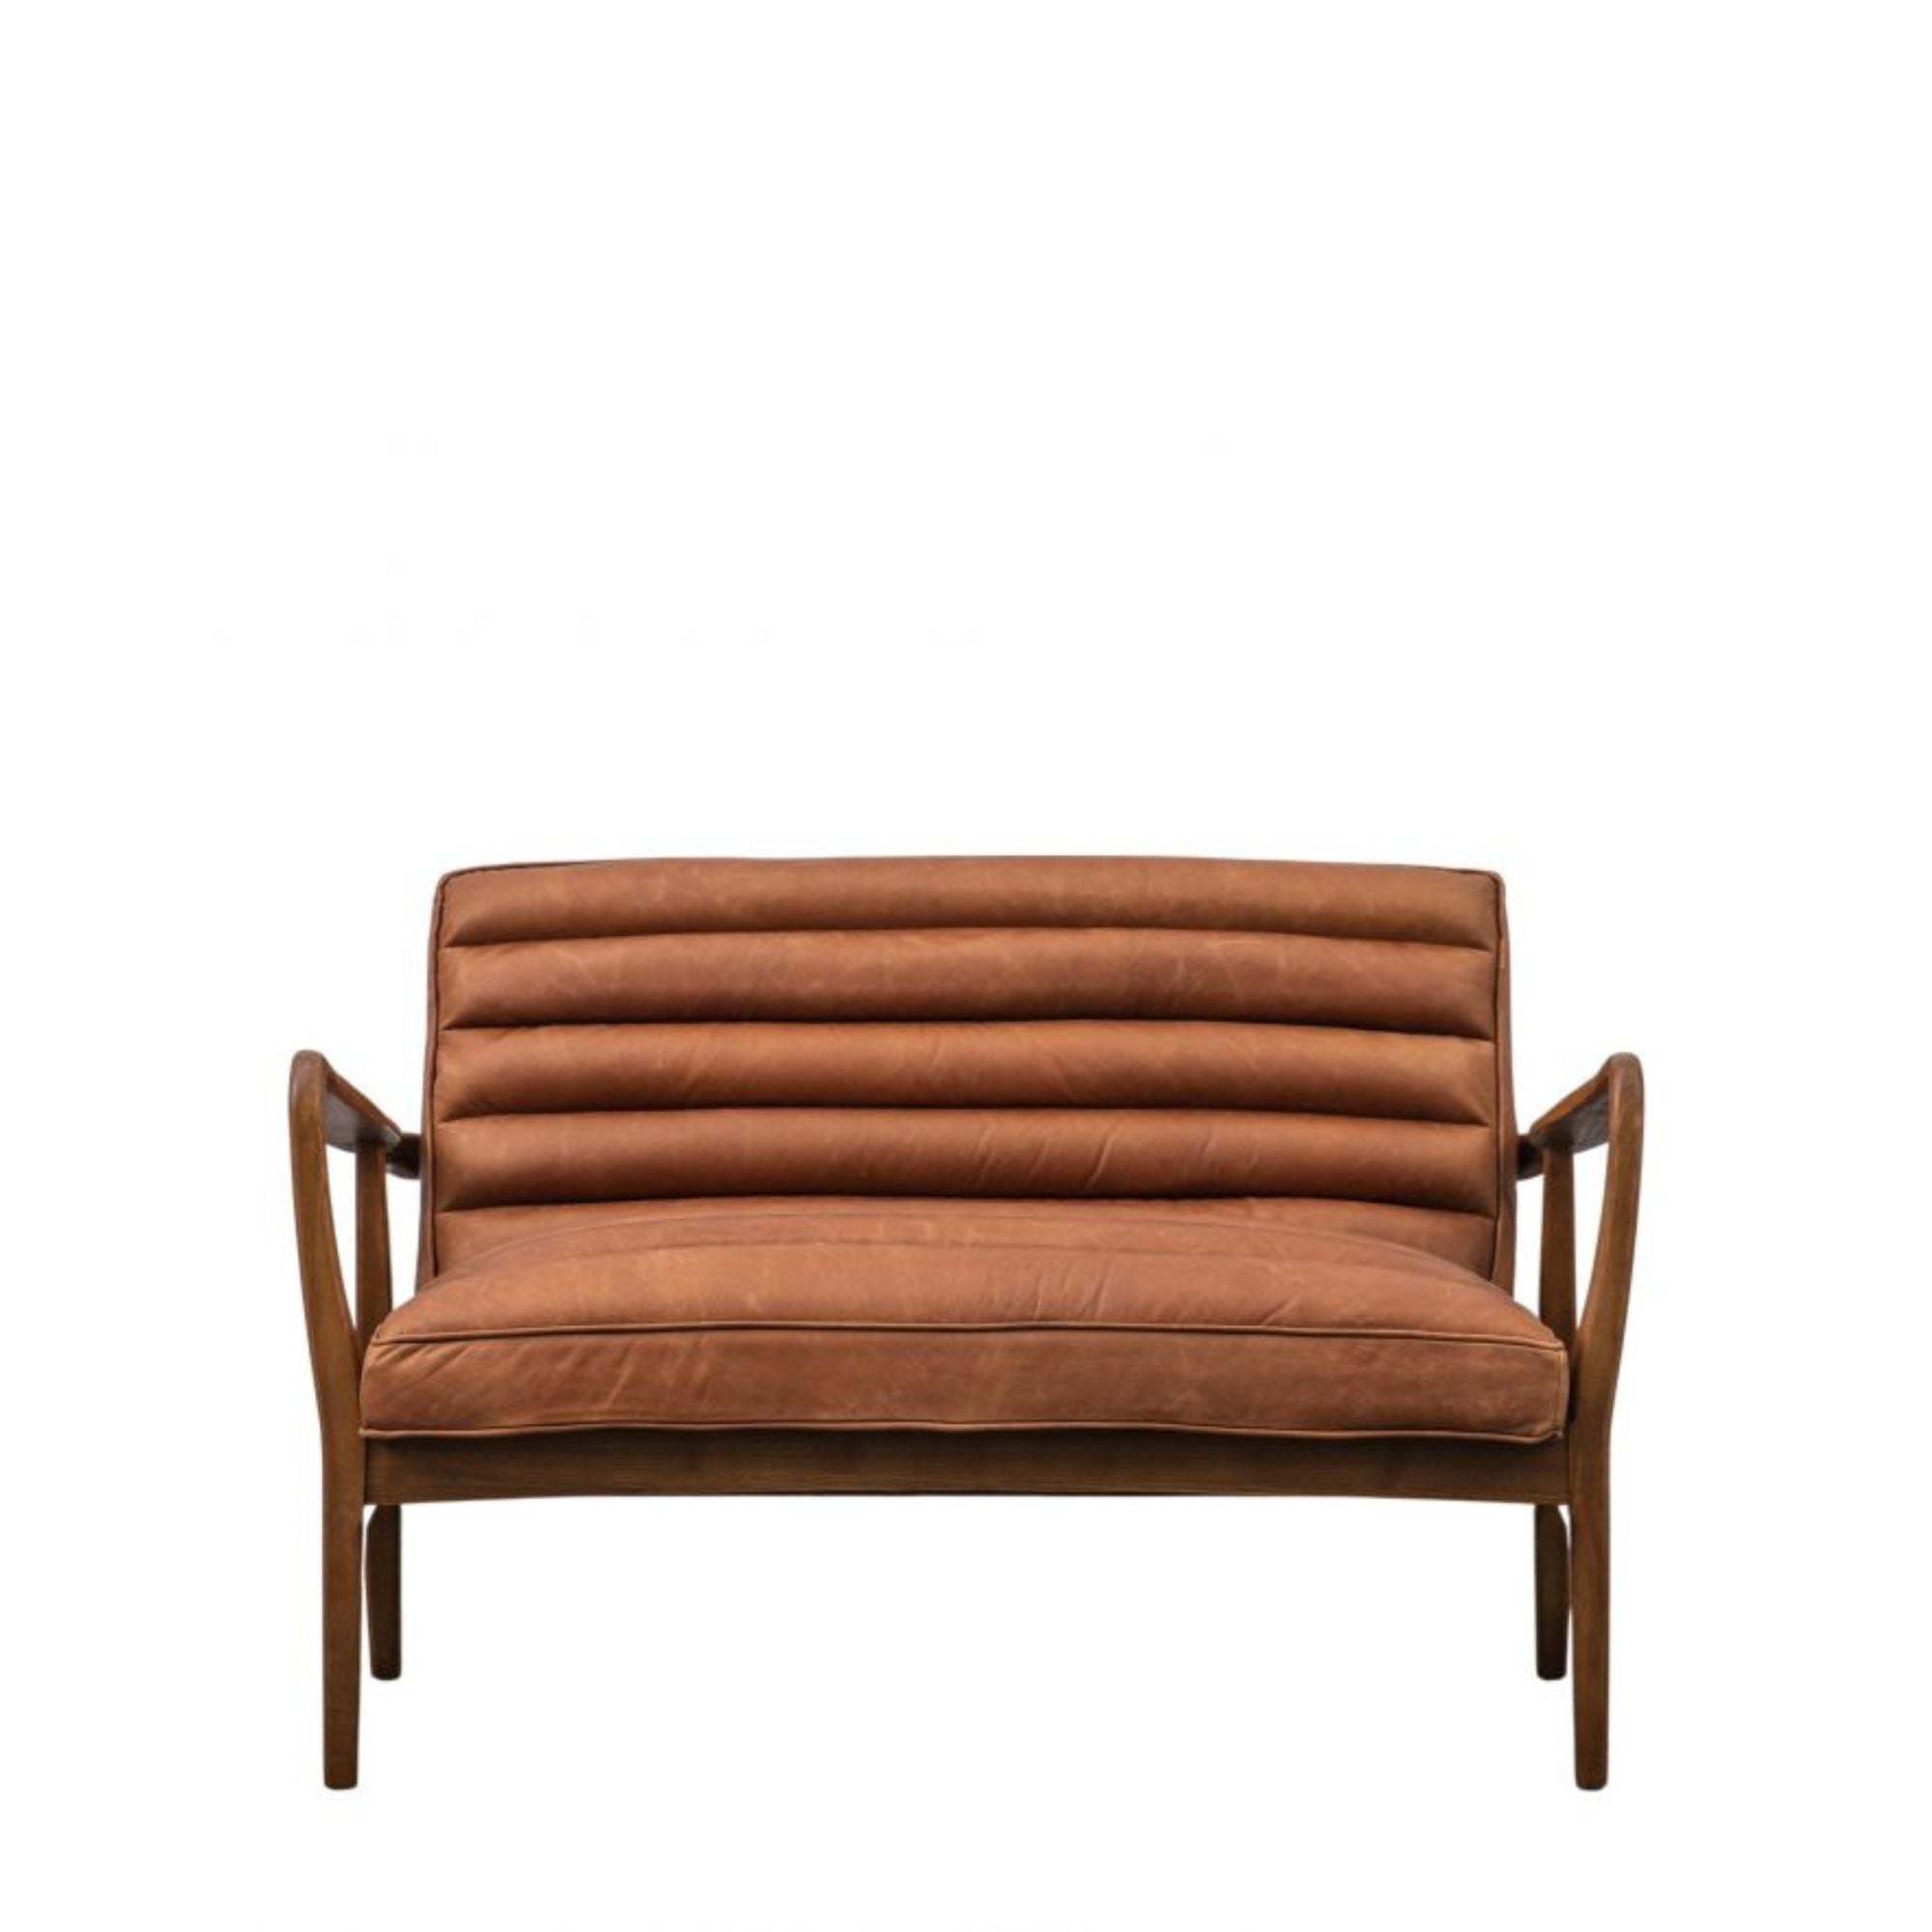 MARCUS 2 seat mid century sofa in vintage brown leather | malletandplane.com